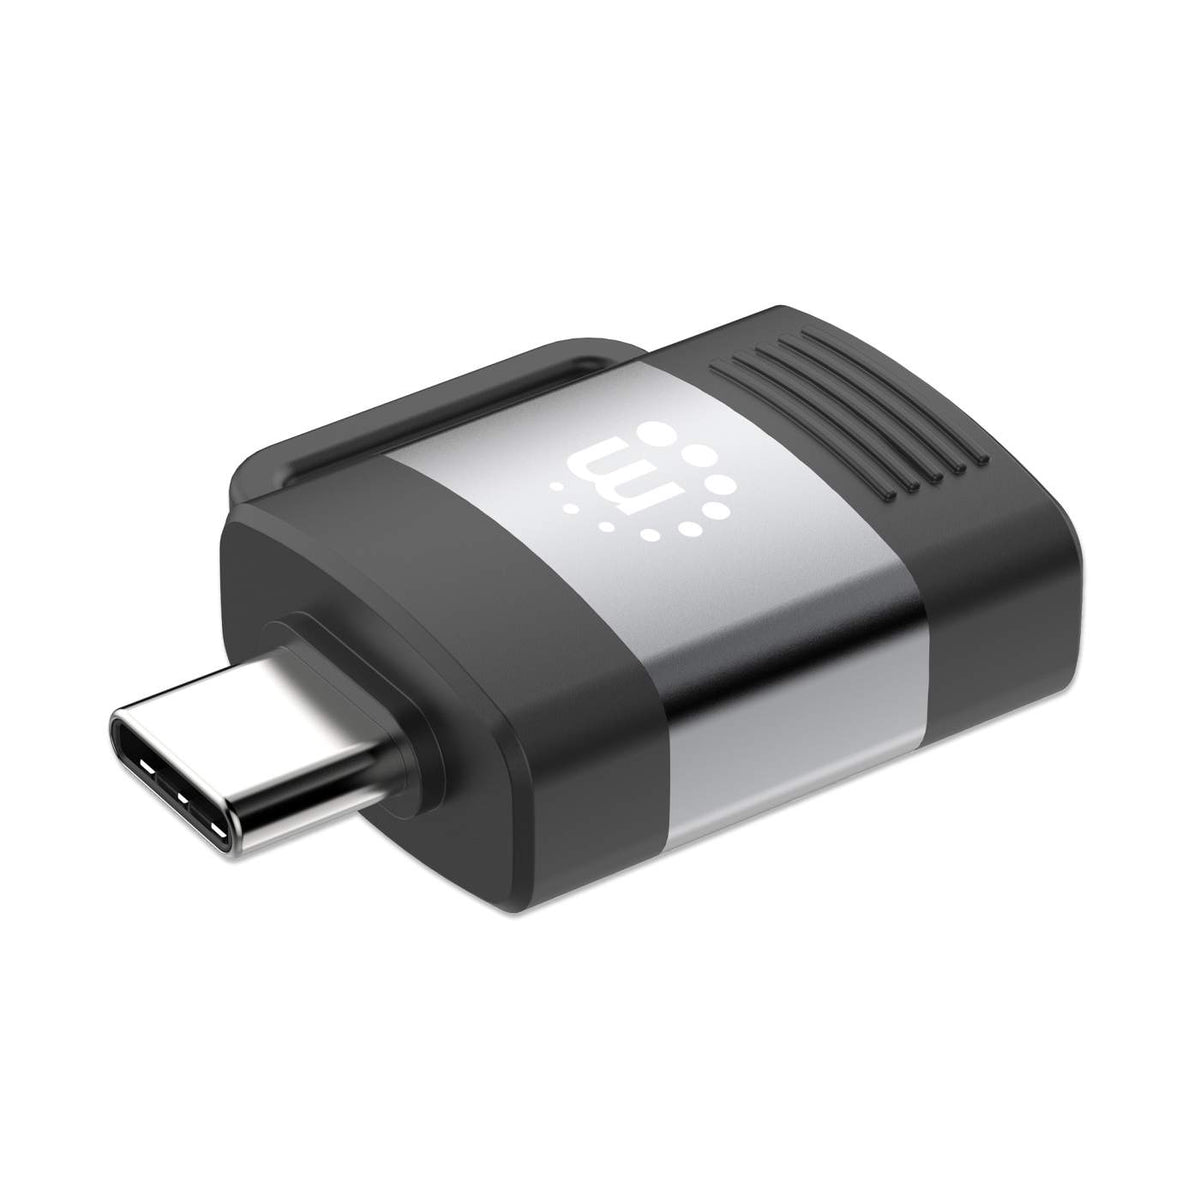 Este adaptador USB-C te permite conectar USB, SD y microSD